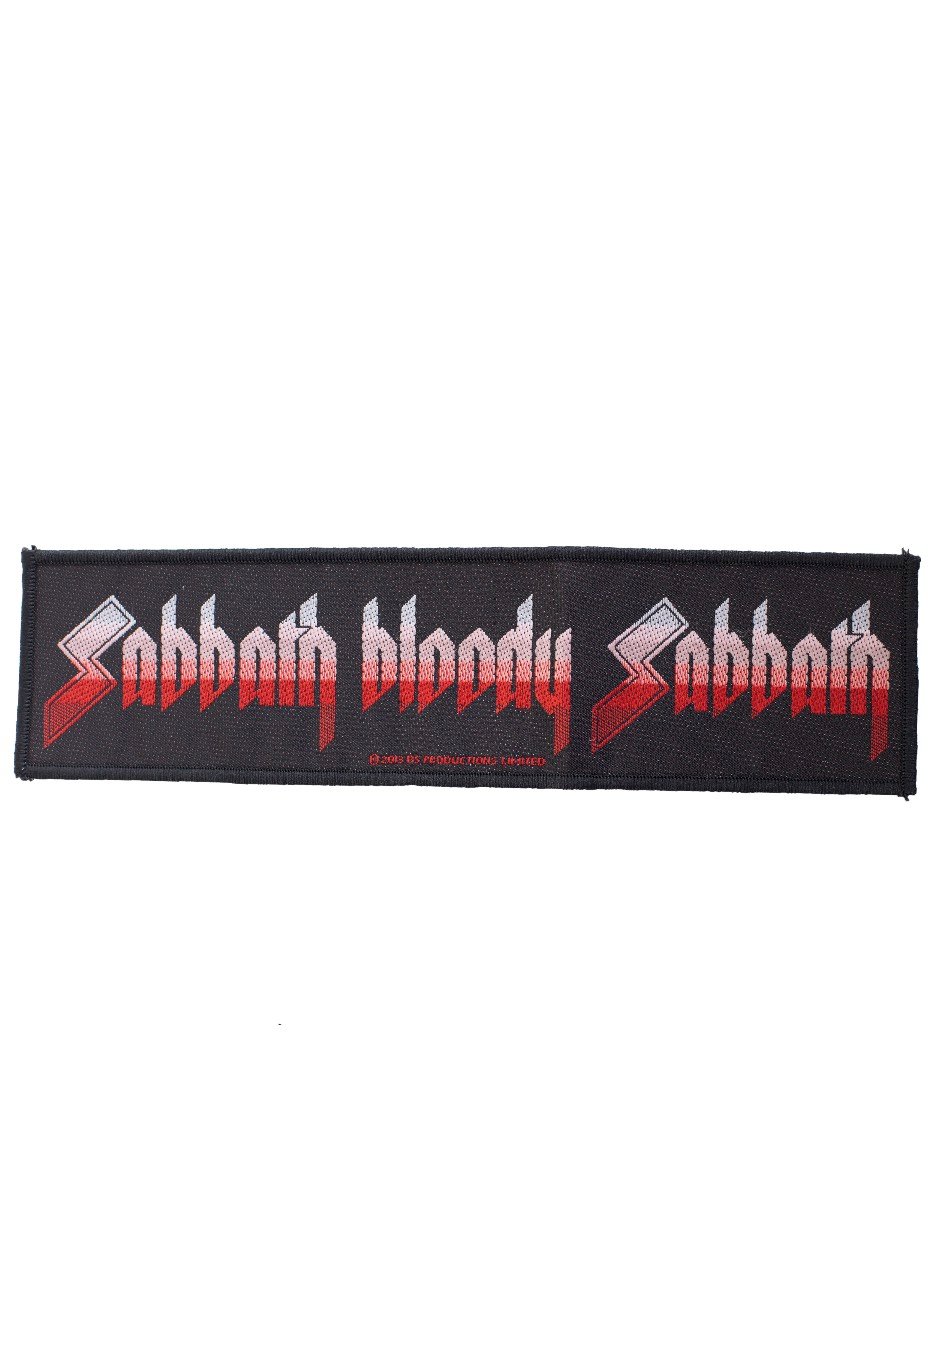 Black Sabbath - Sabbath Bloddy Sabbath - Patch